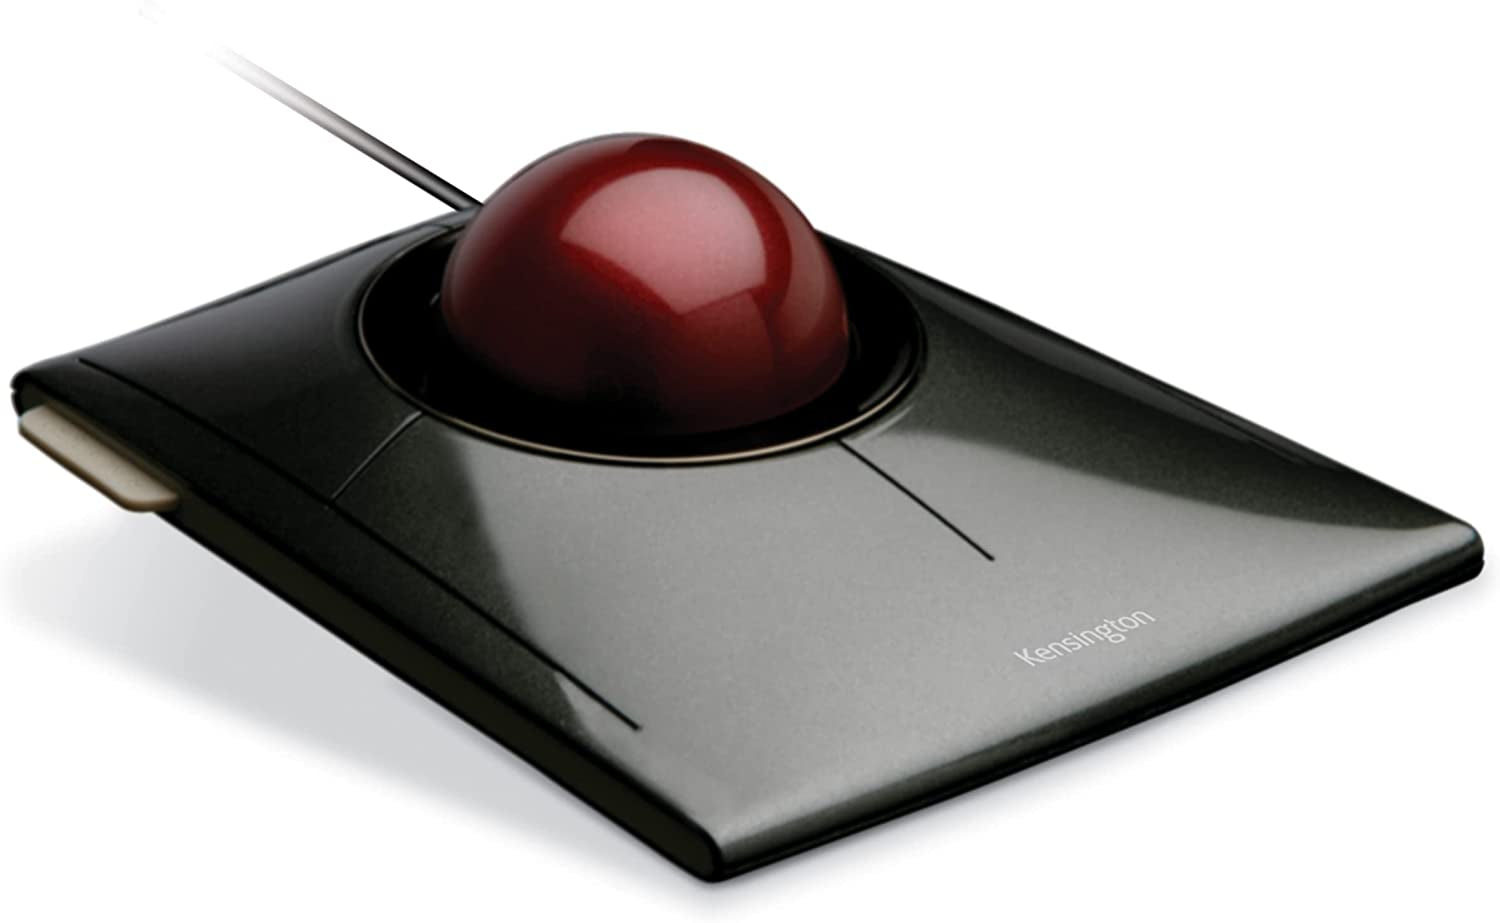 Wired Slimblade Trackball Mouse (K72327U), Black - Growing Apex Tech